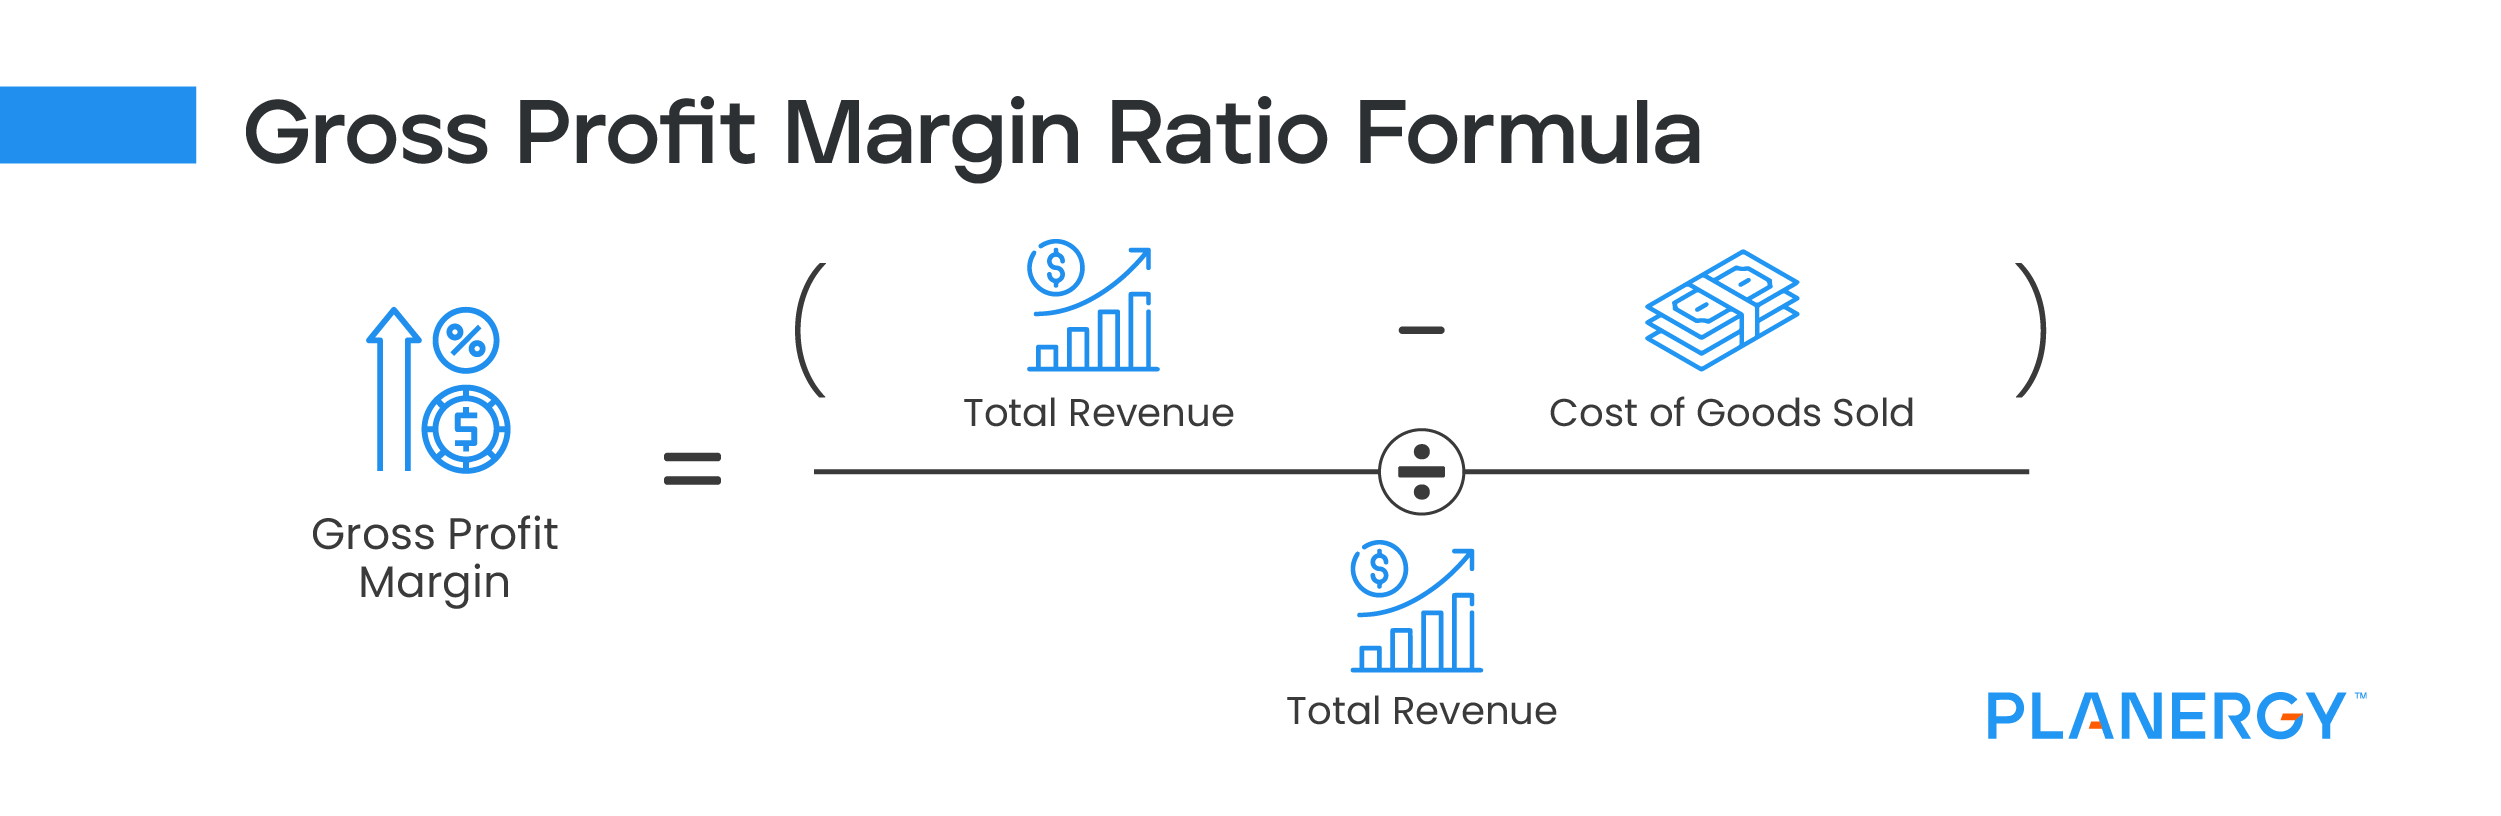 Gross Profit Margin Ratio Formula